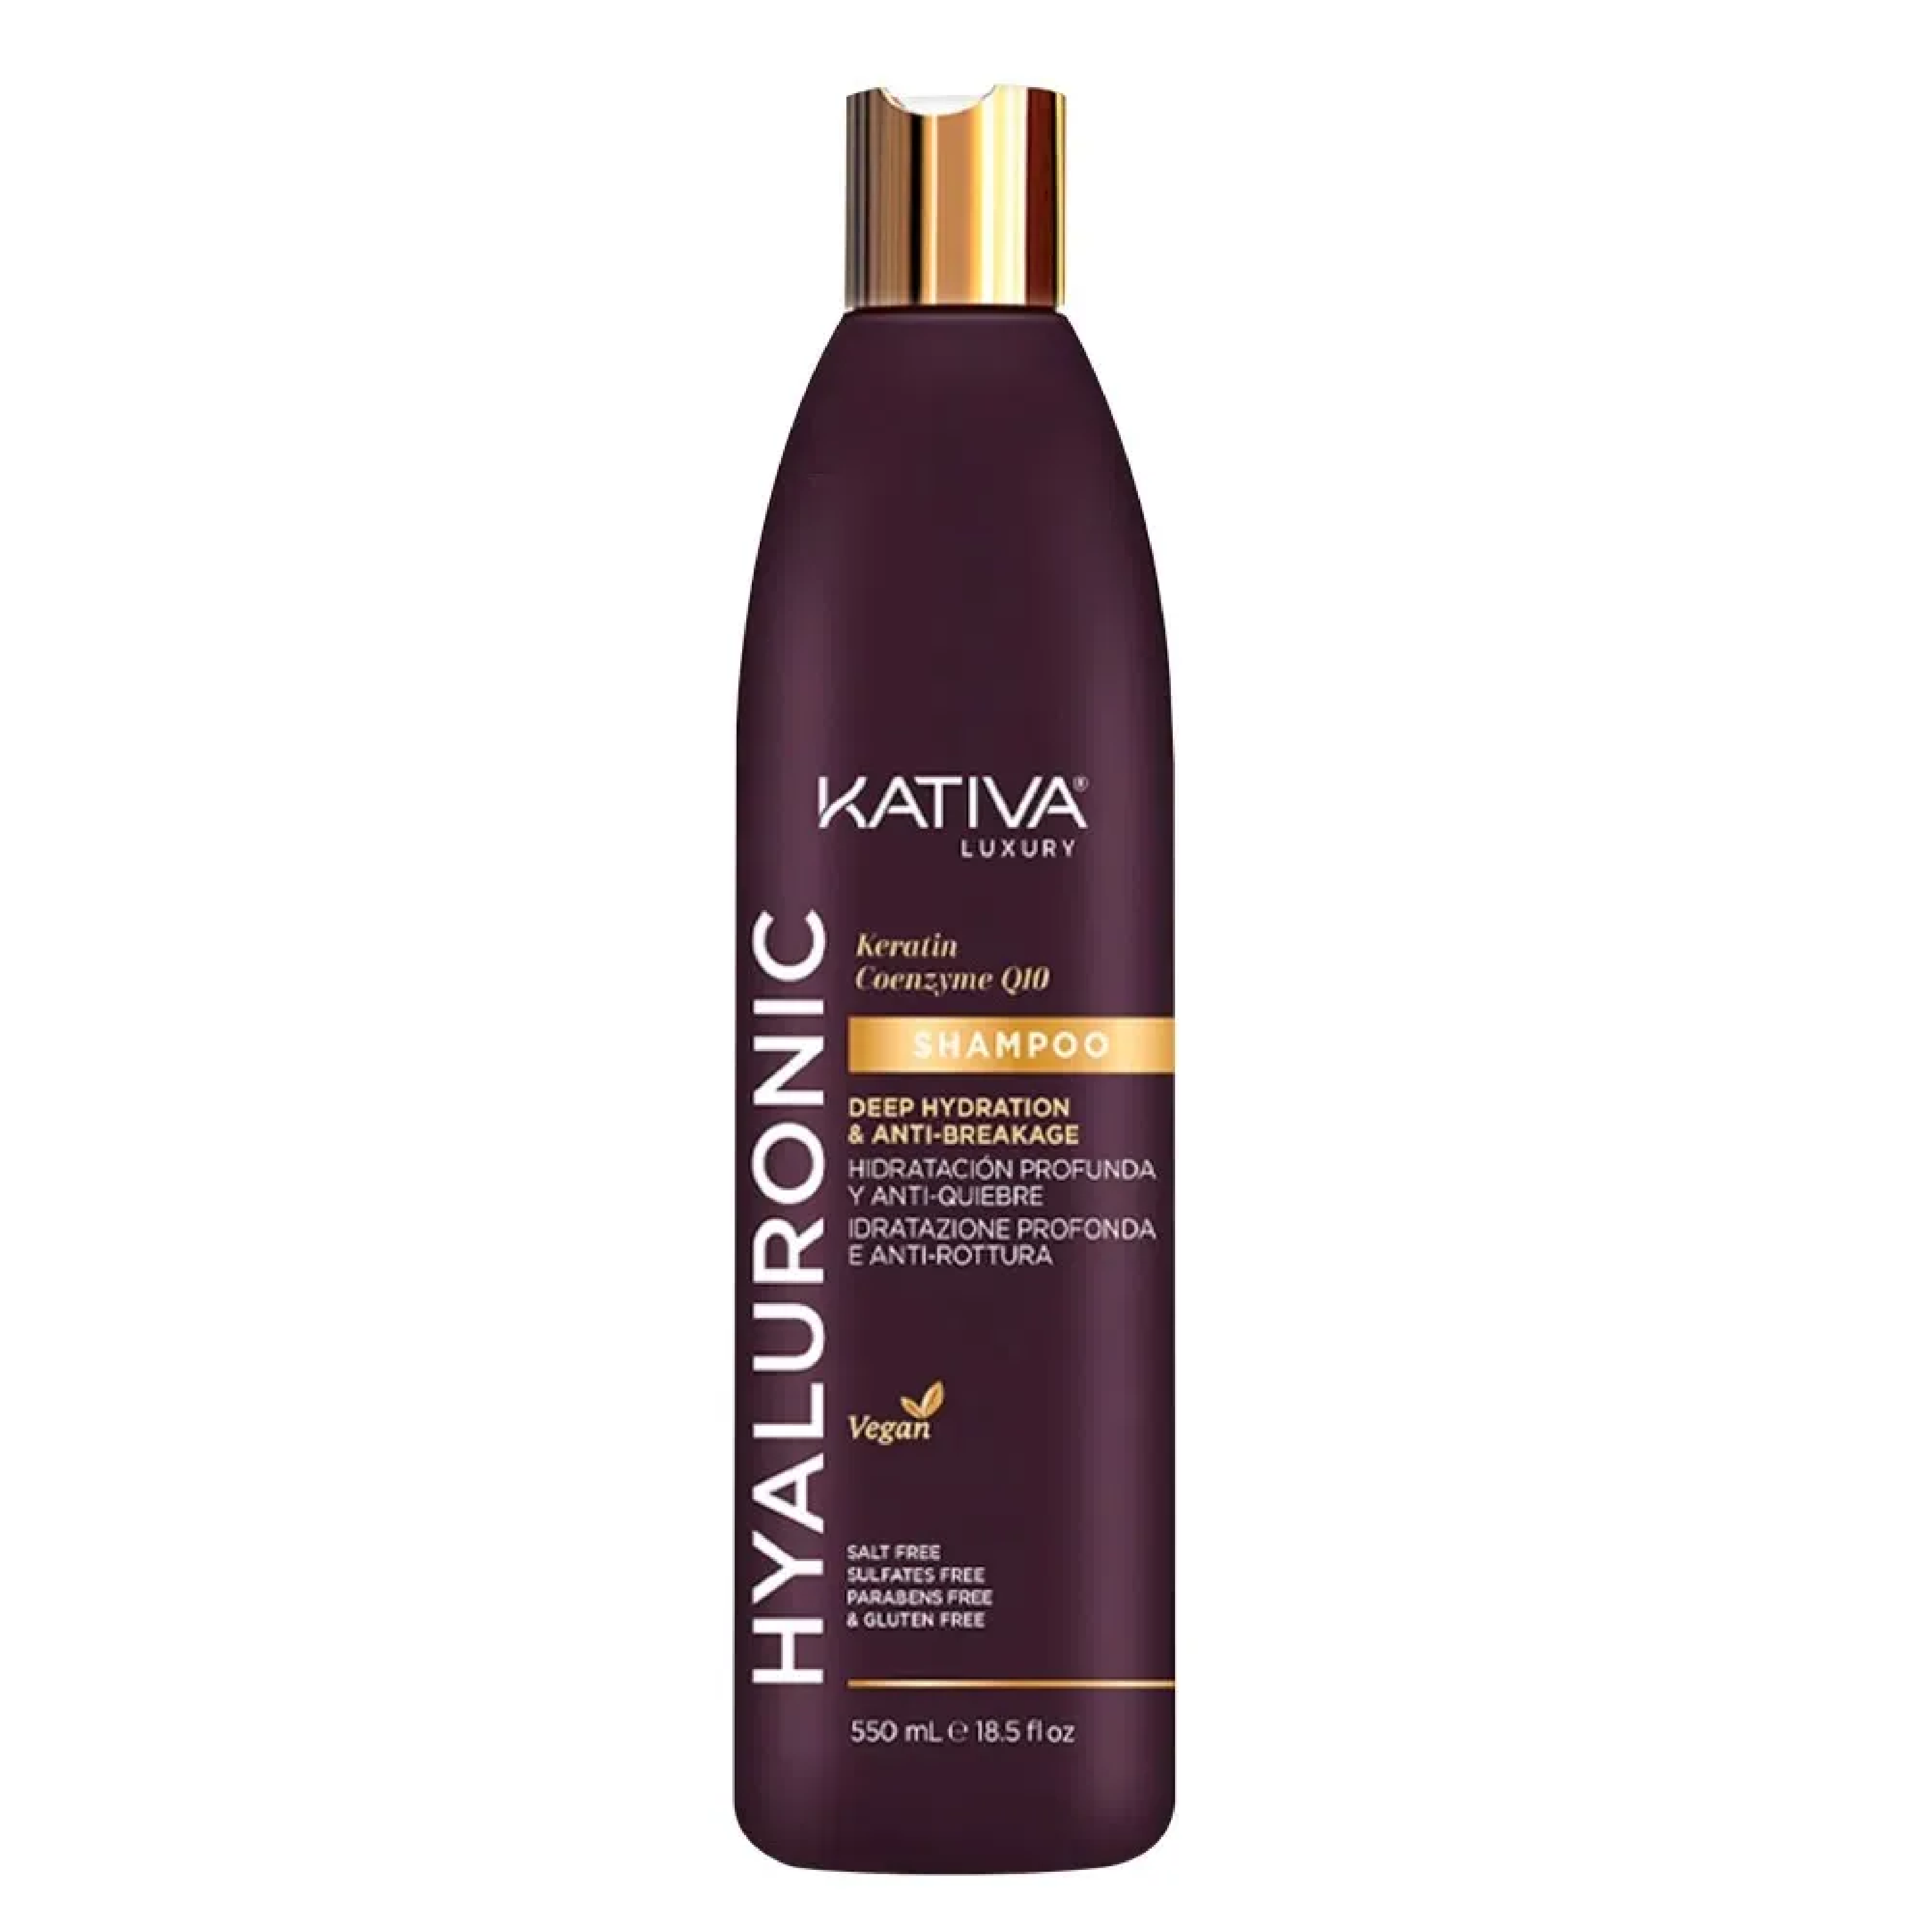 Kativa Shampoo Hyaluronic Hidratacion Profunda de 550 ml